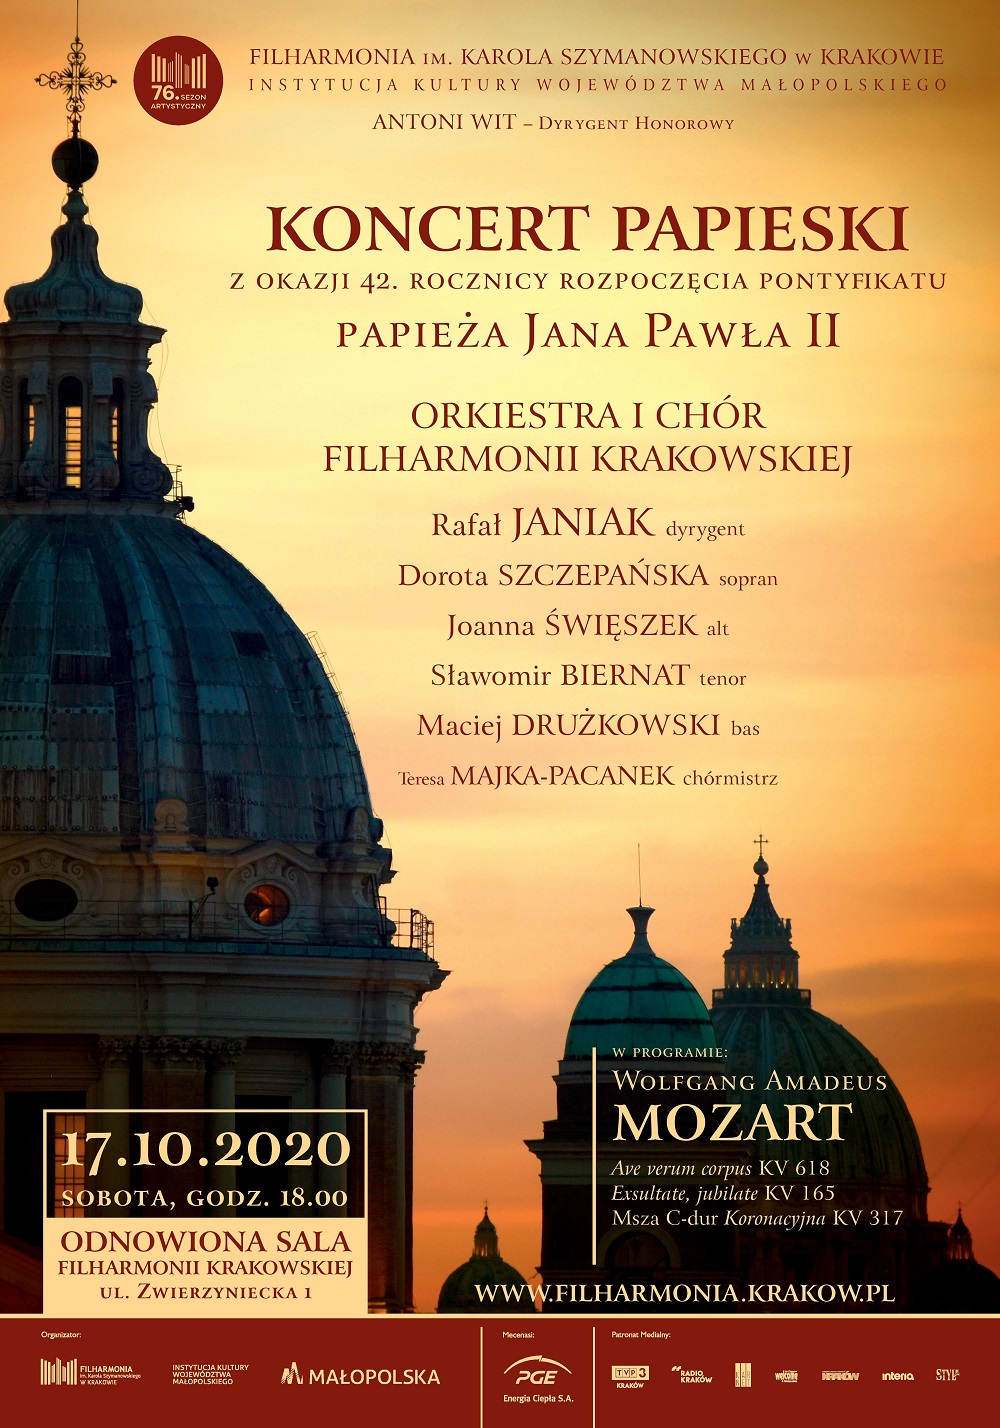 Koncert papieski w Filharmonii Krakowskiej. Plakat